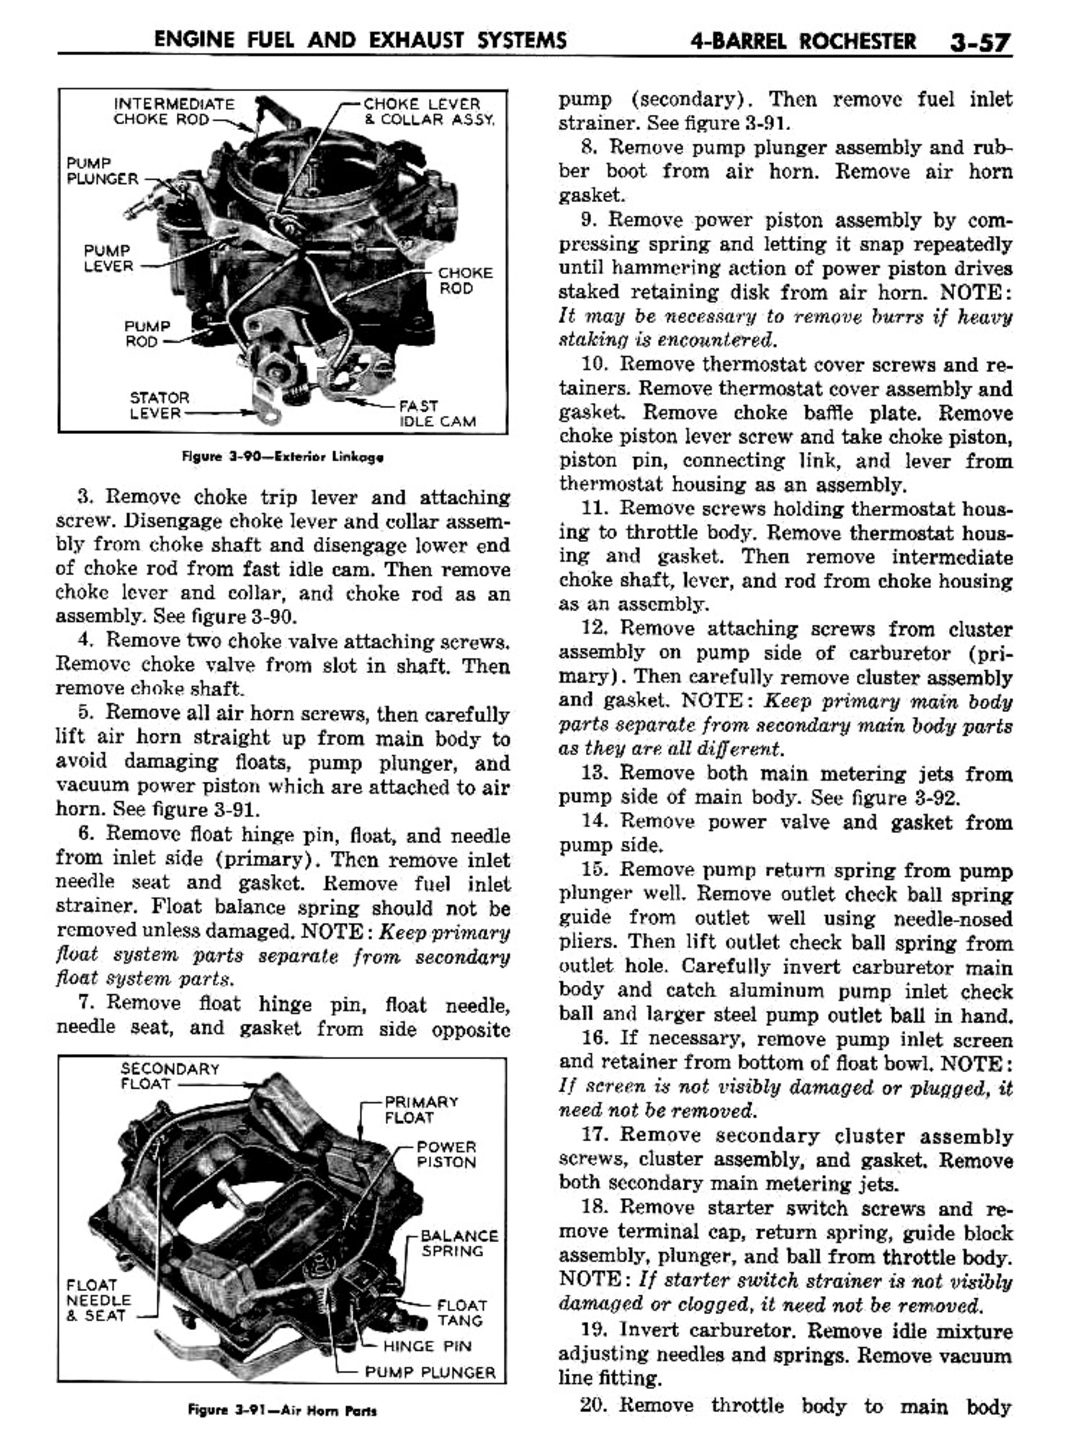 n_04 1957 Buick Shop Manual - Engine Fuel & Exhaust-057-057.jpg